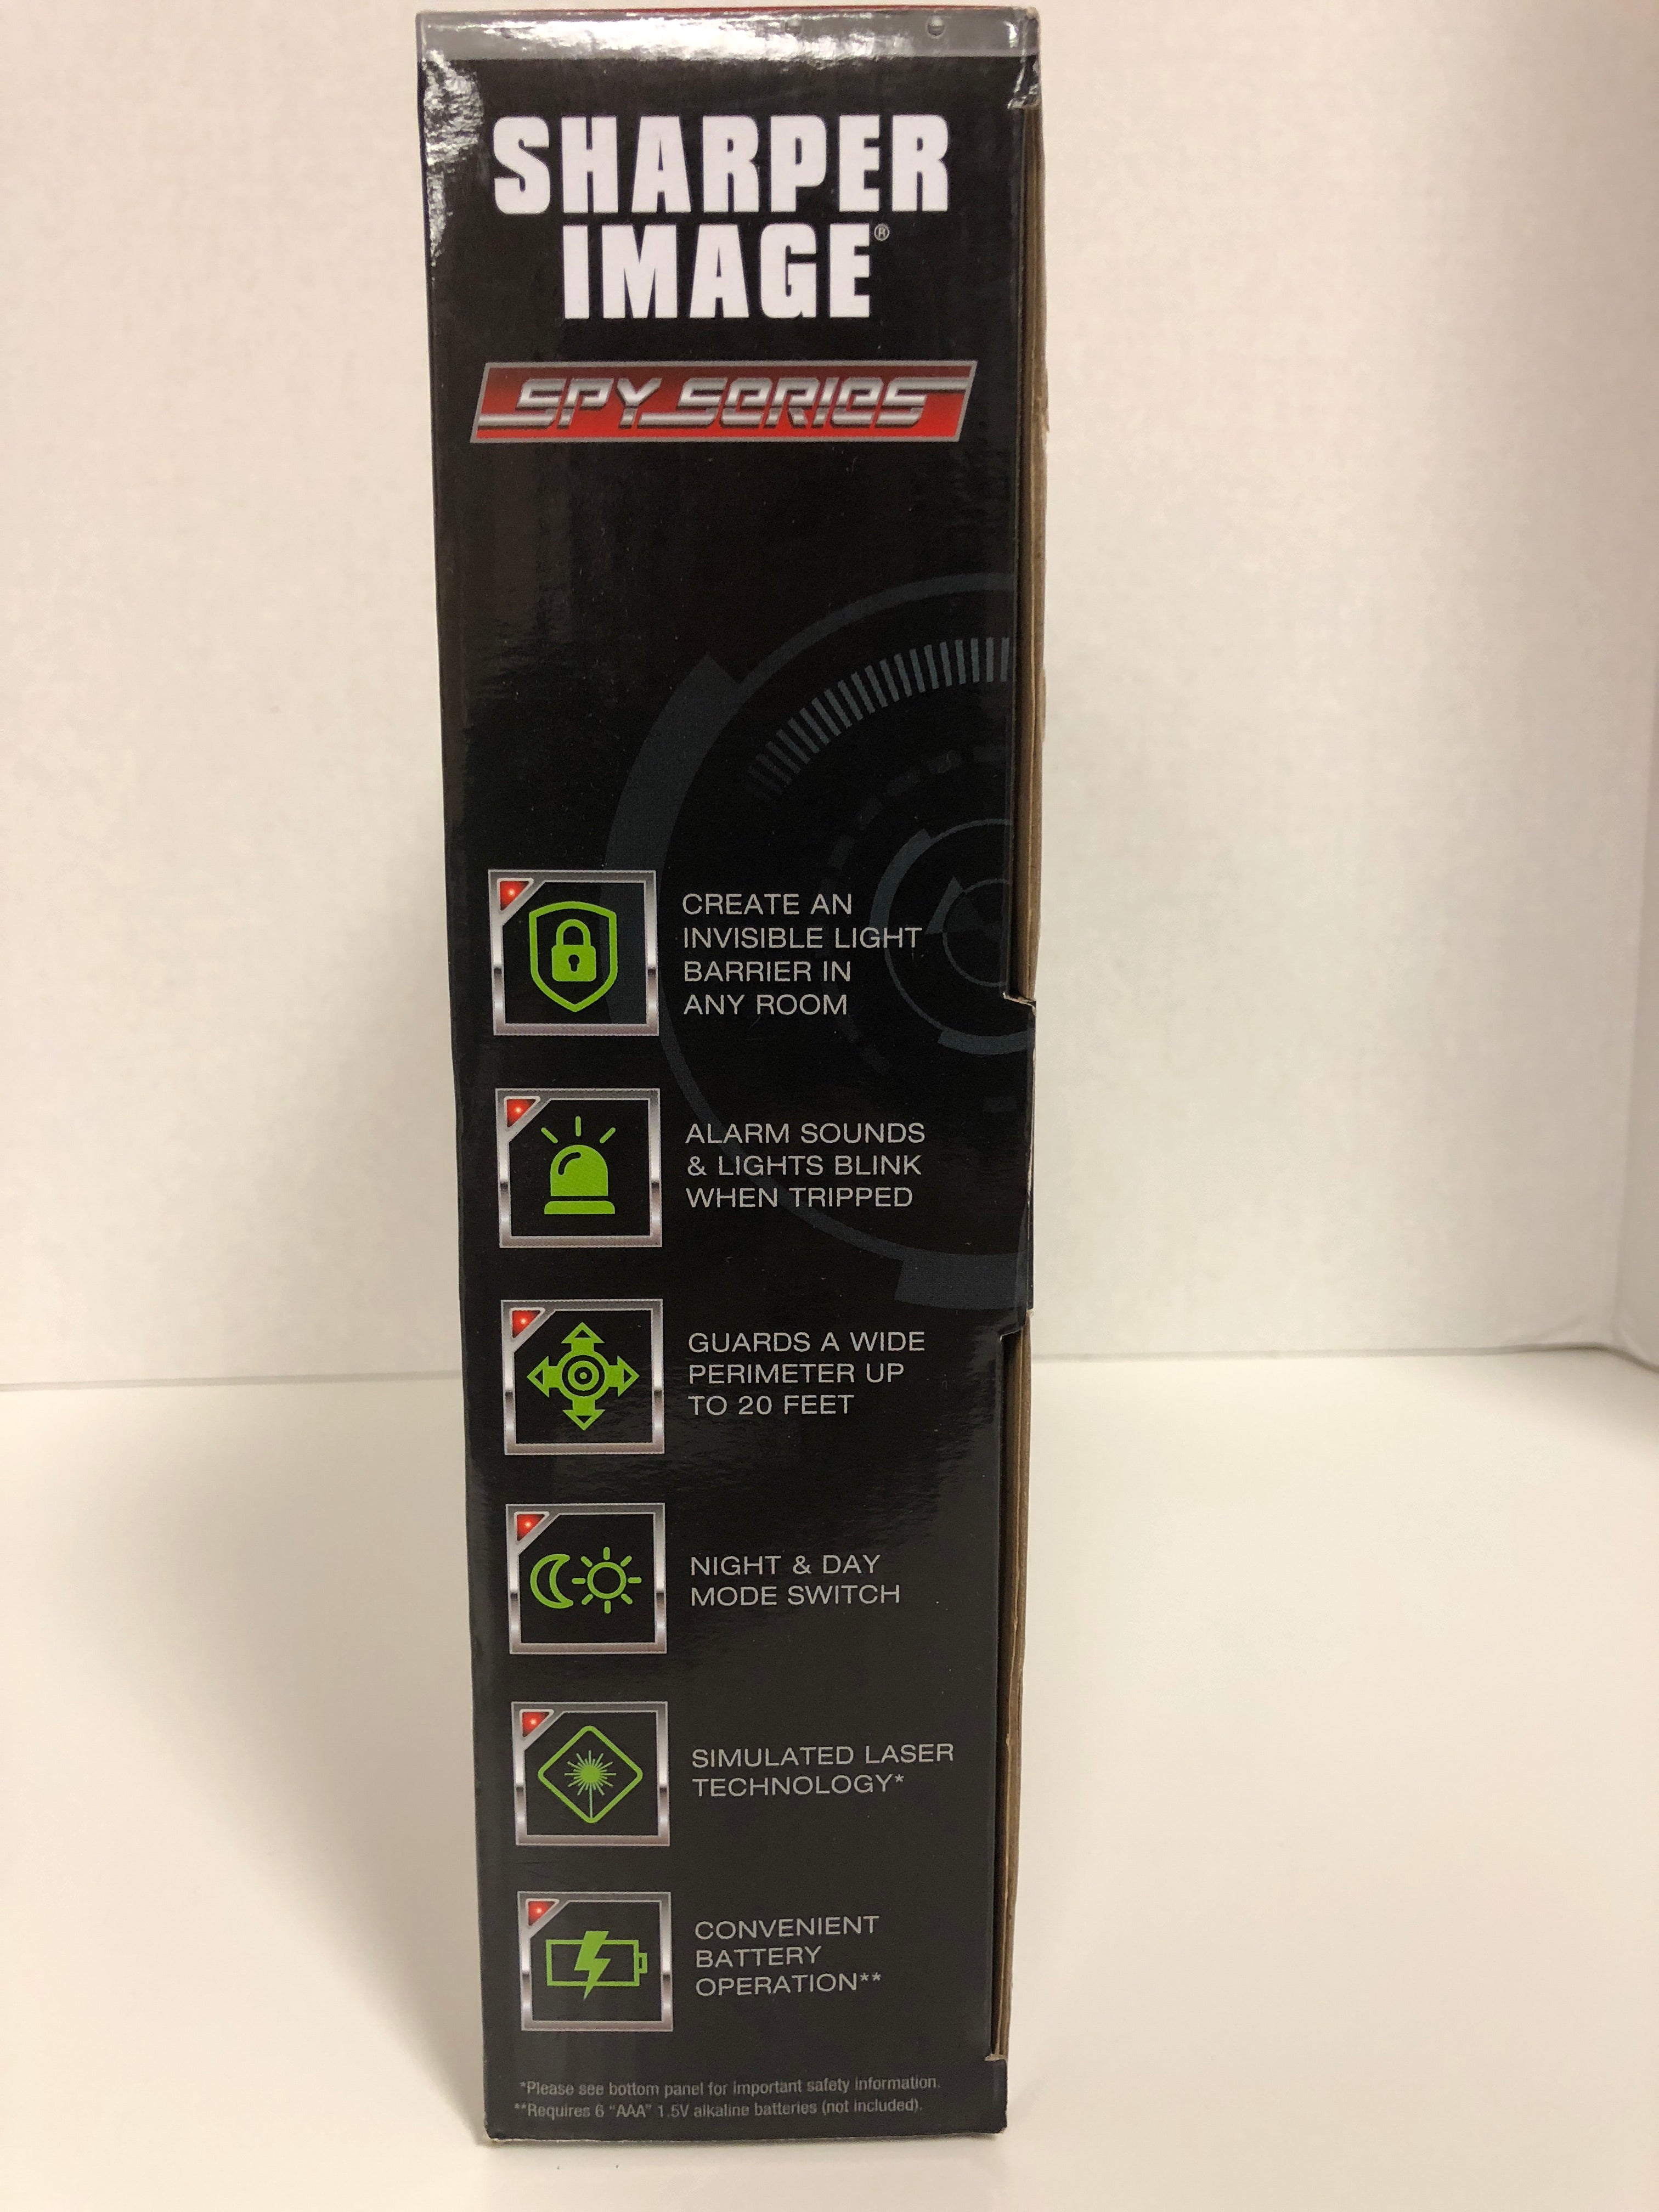 Sharper Image Secret Laser Shield Invisible Defense Network Spy Series Trigger Alarm Secure Perimeters